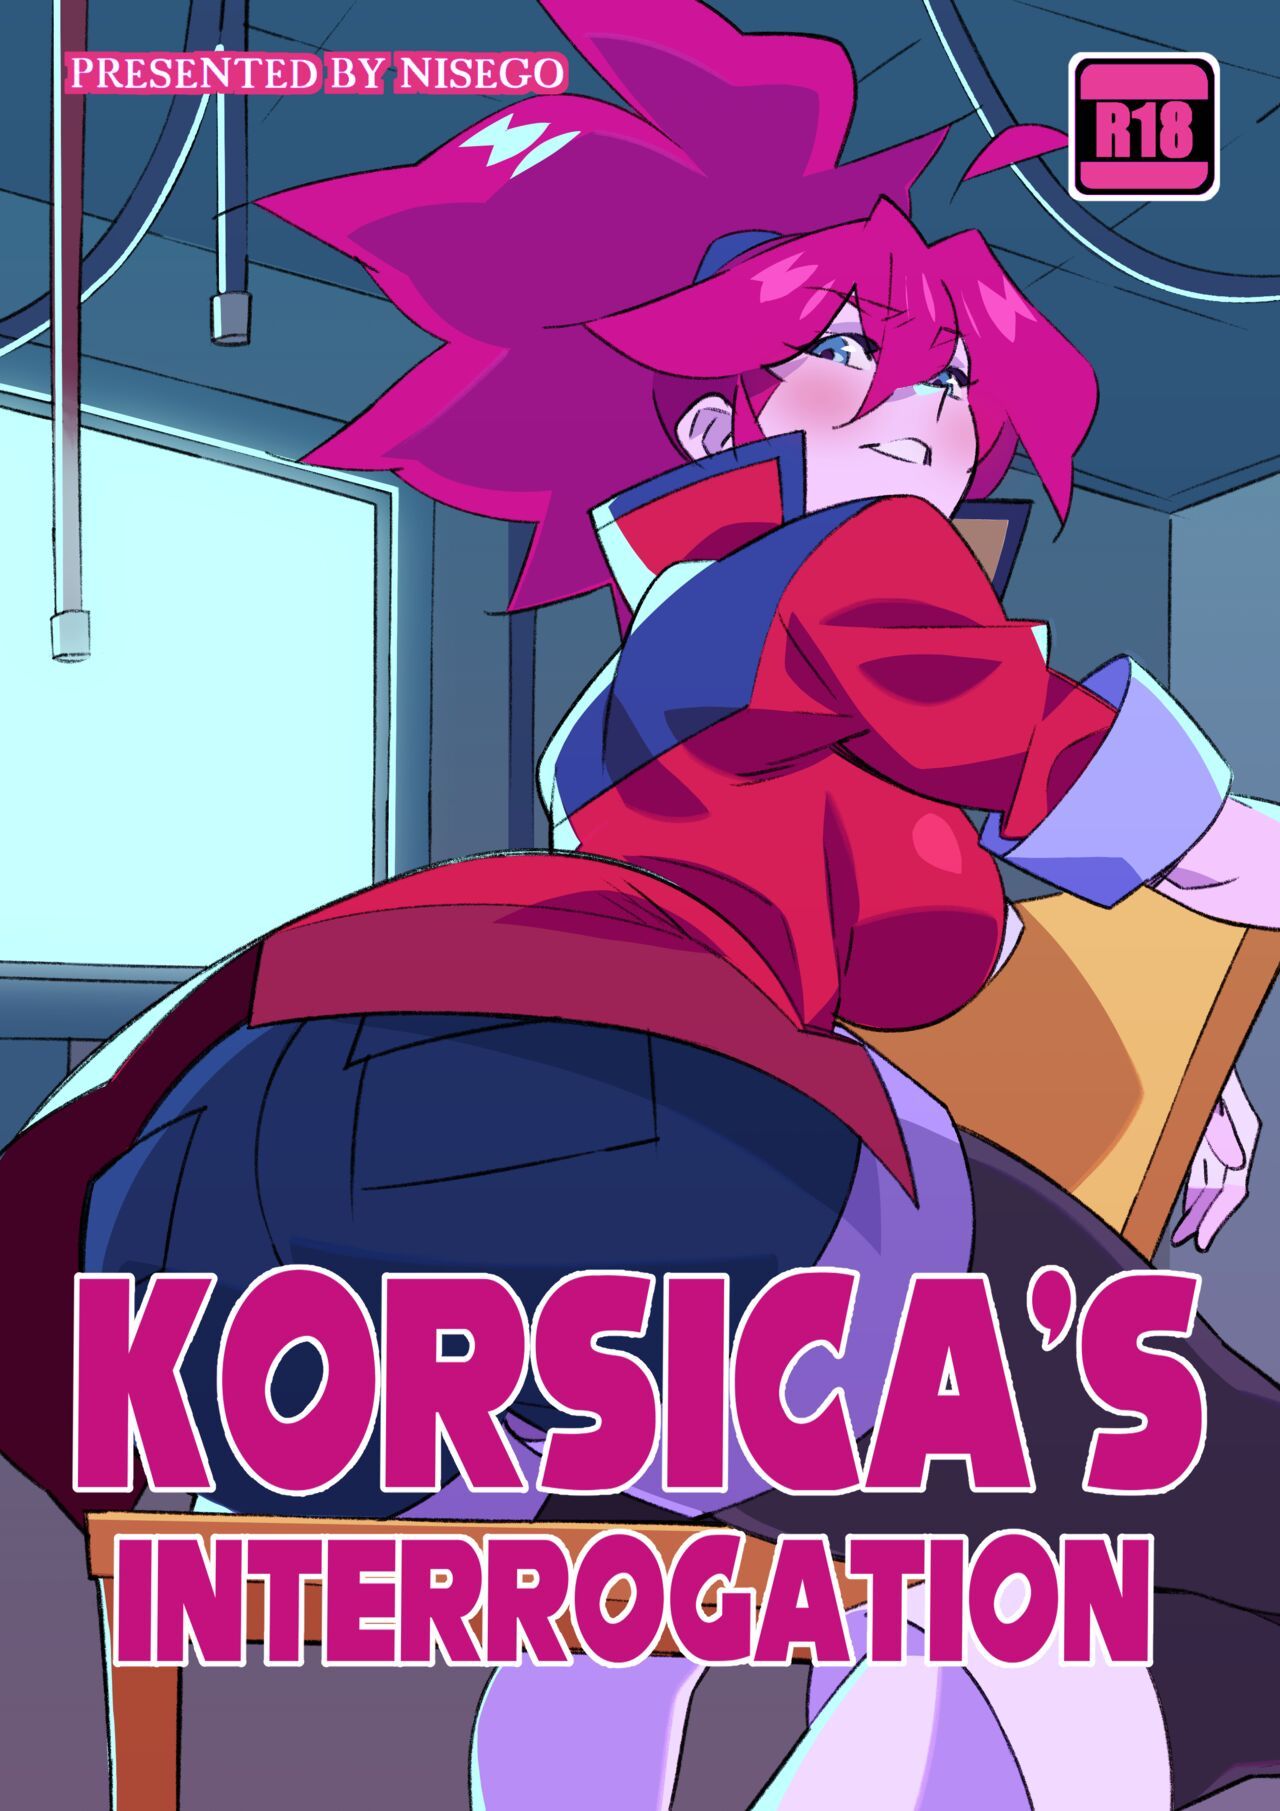 Korsica’s Interrogation  Porn Comic english 01